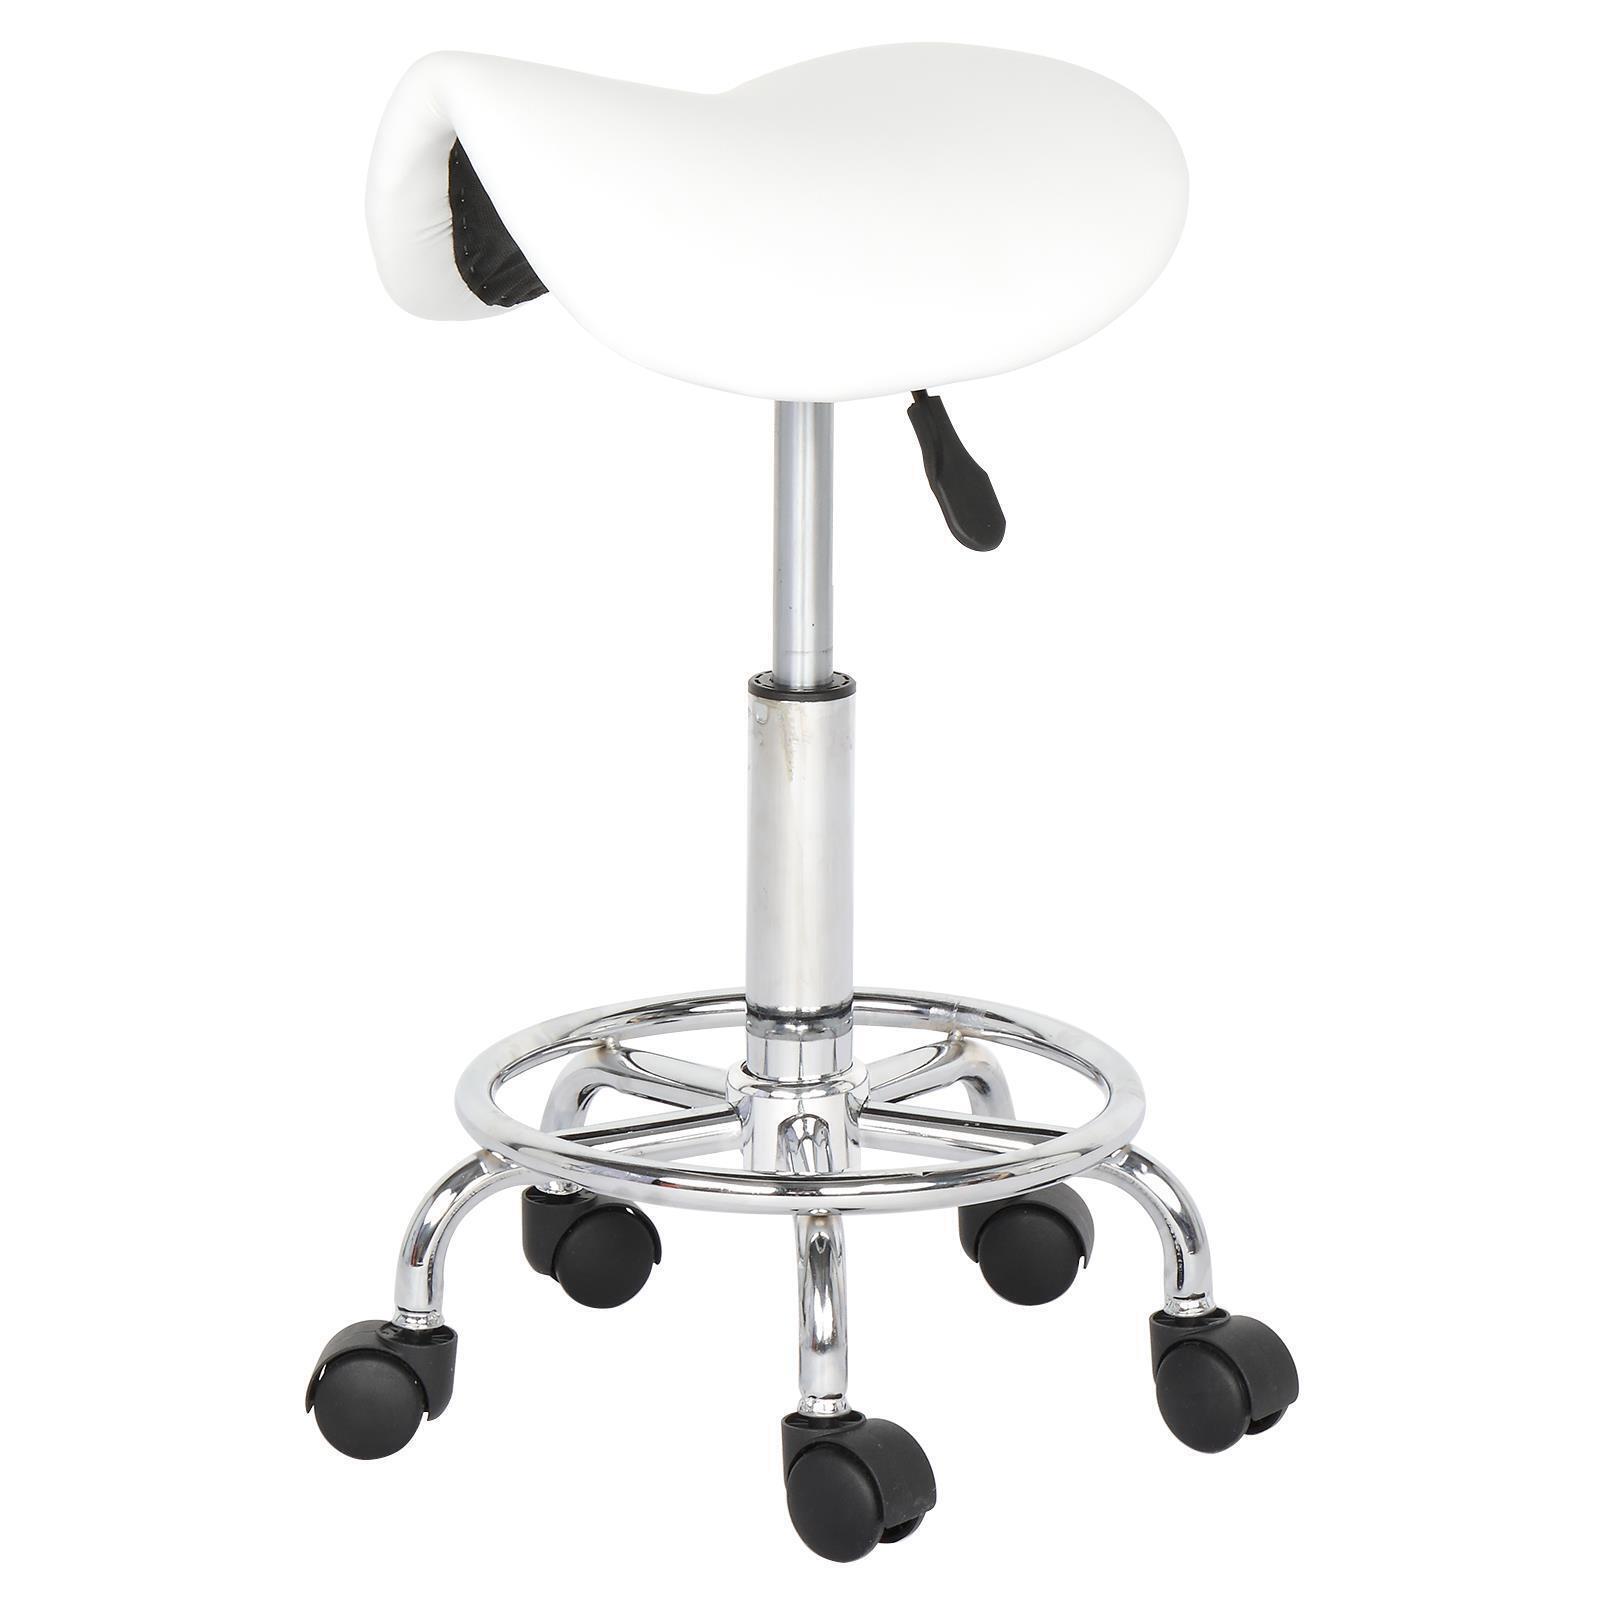 thinkstar Multi-Purpose Hydraulic Adjustable Saddle Rolling Swivel Stool Chair With Wheels